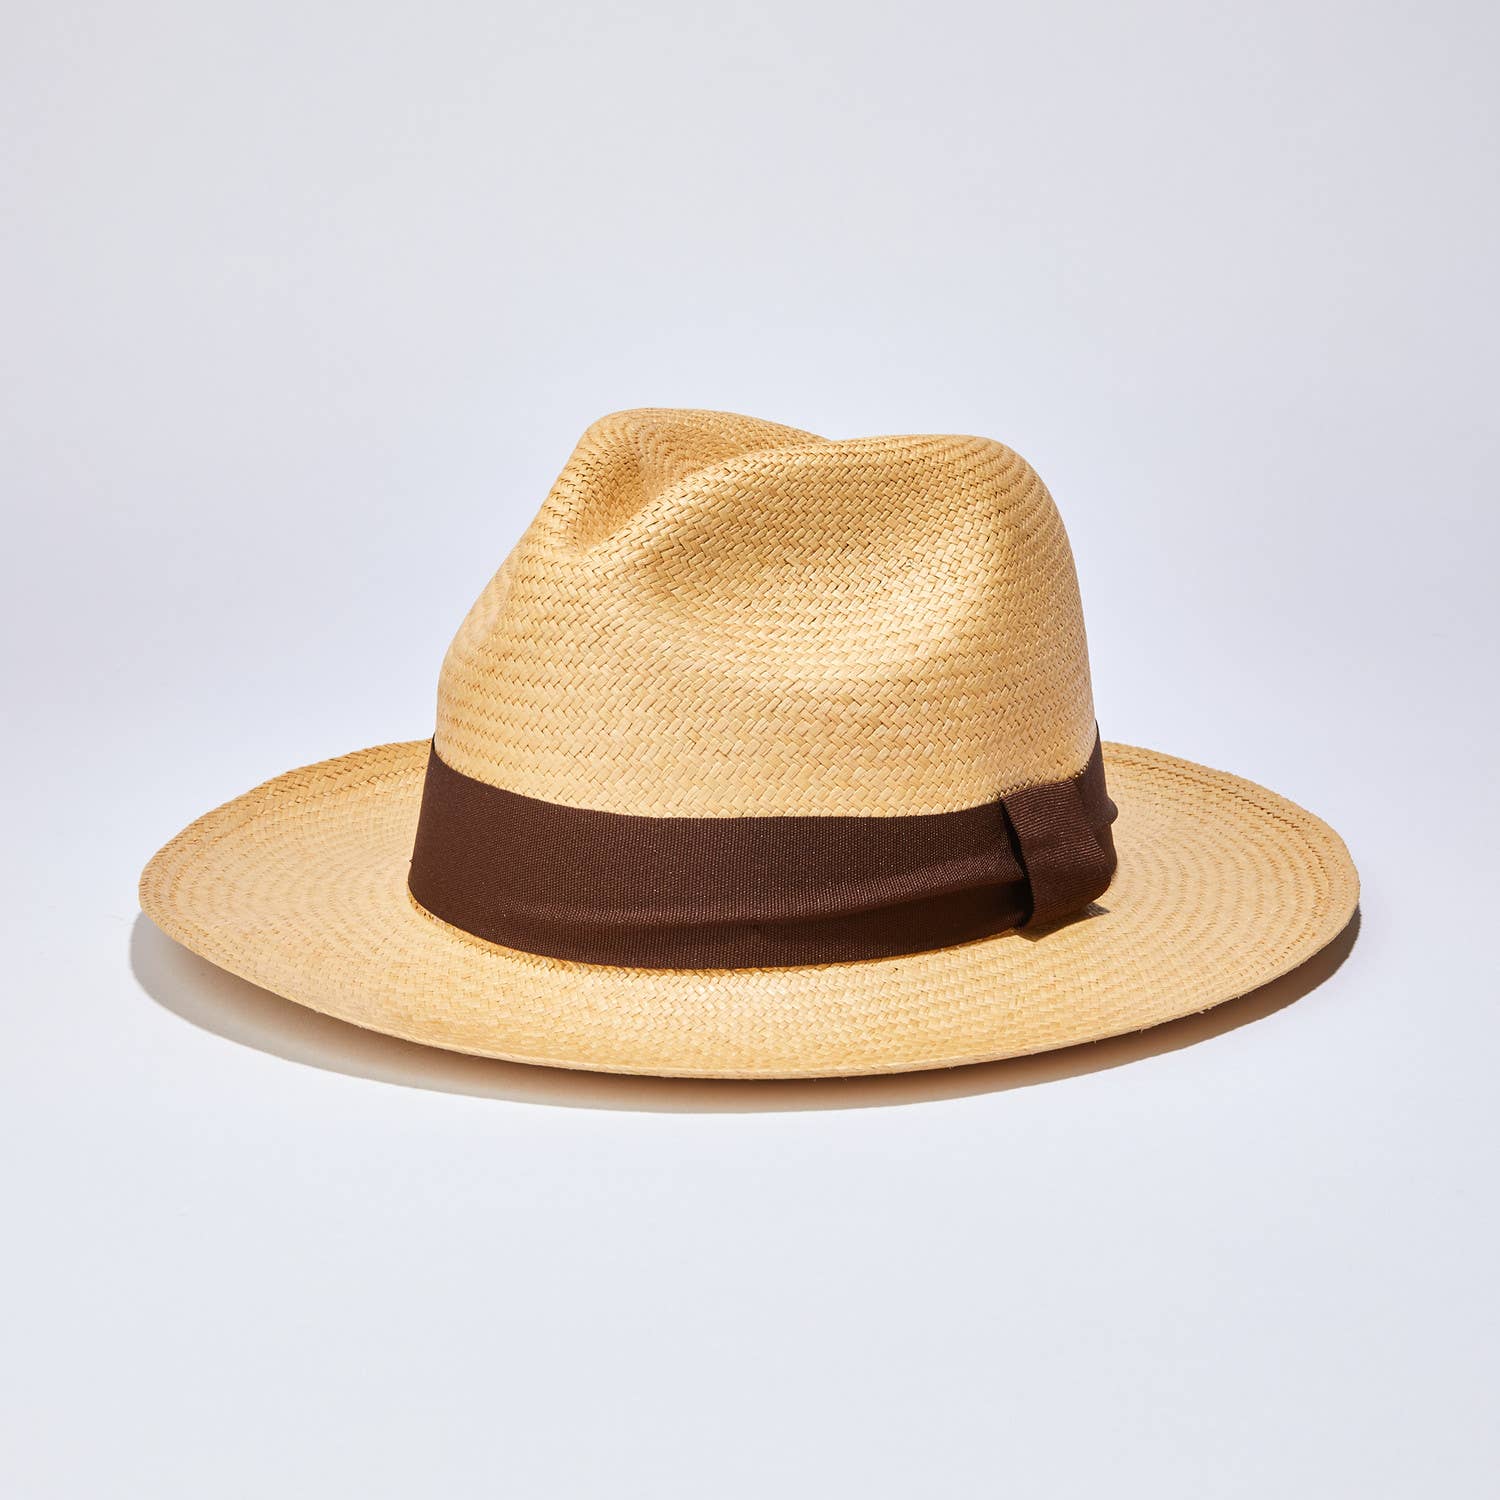 Classic Beige Panama Hat - Unisex - Nubian Lane Hat Co.